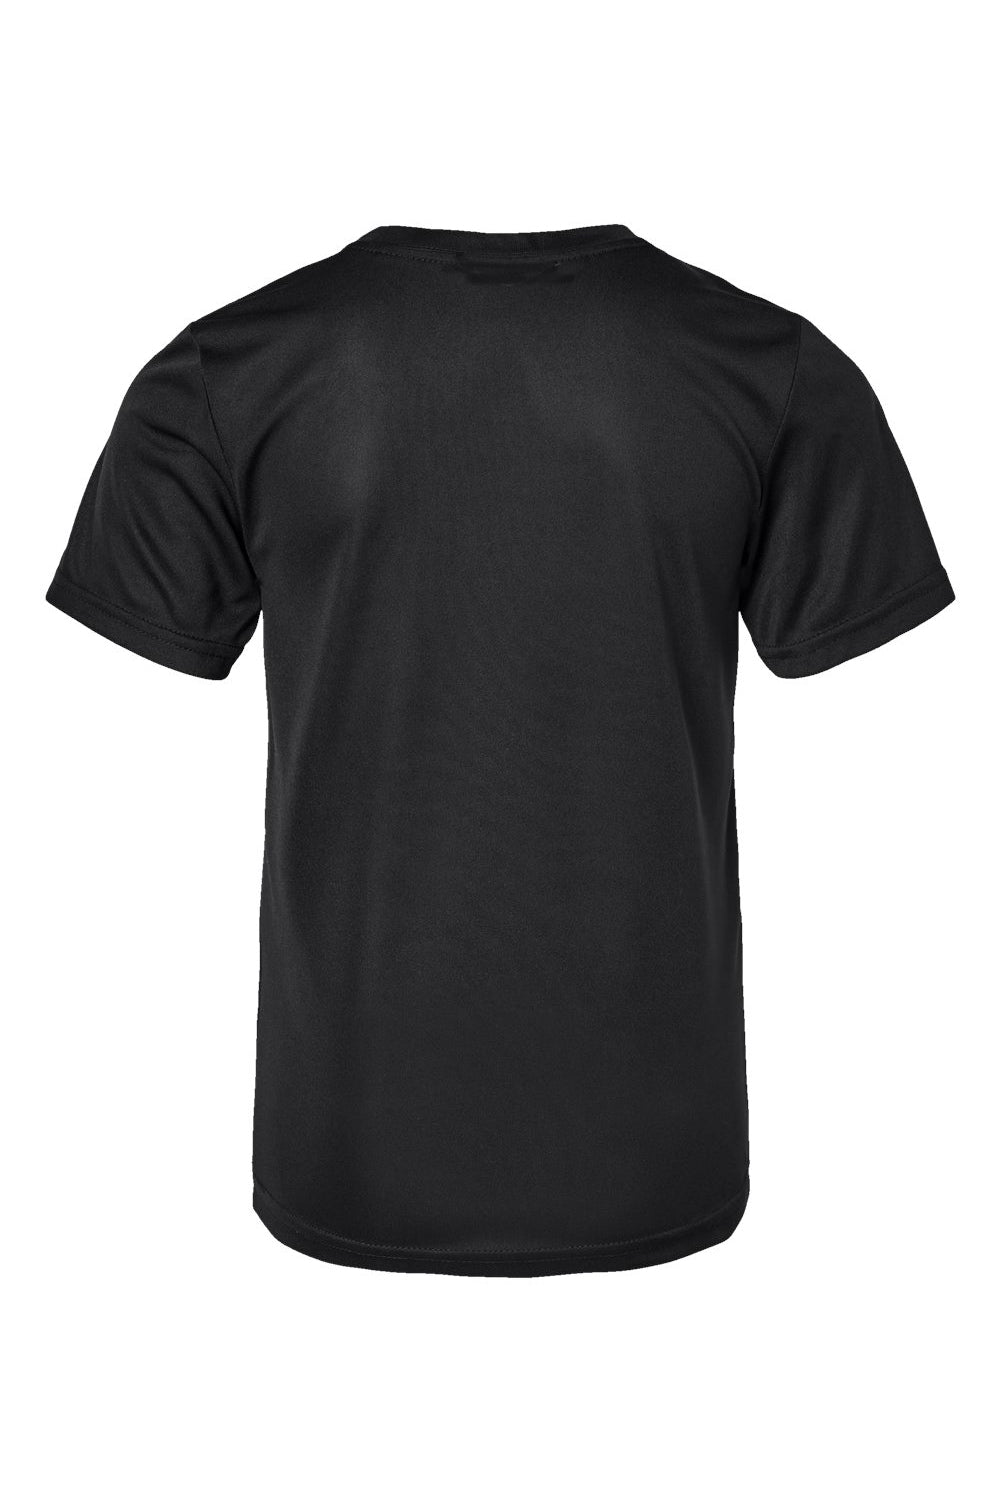 Augusta Sportswear 791 Youth Nexgen Moisture Wicking Short Sleeve Crewneck T-Shirt Black Flat Back